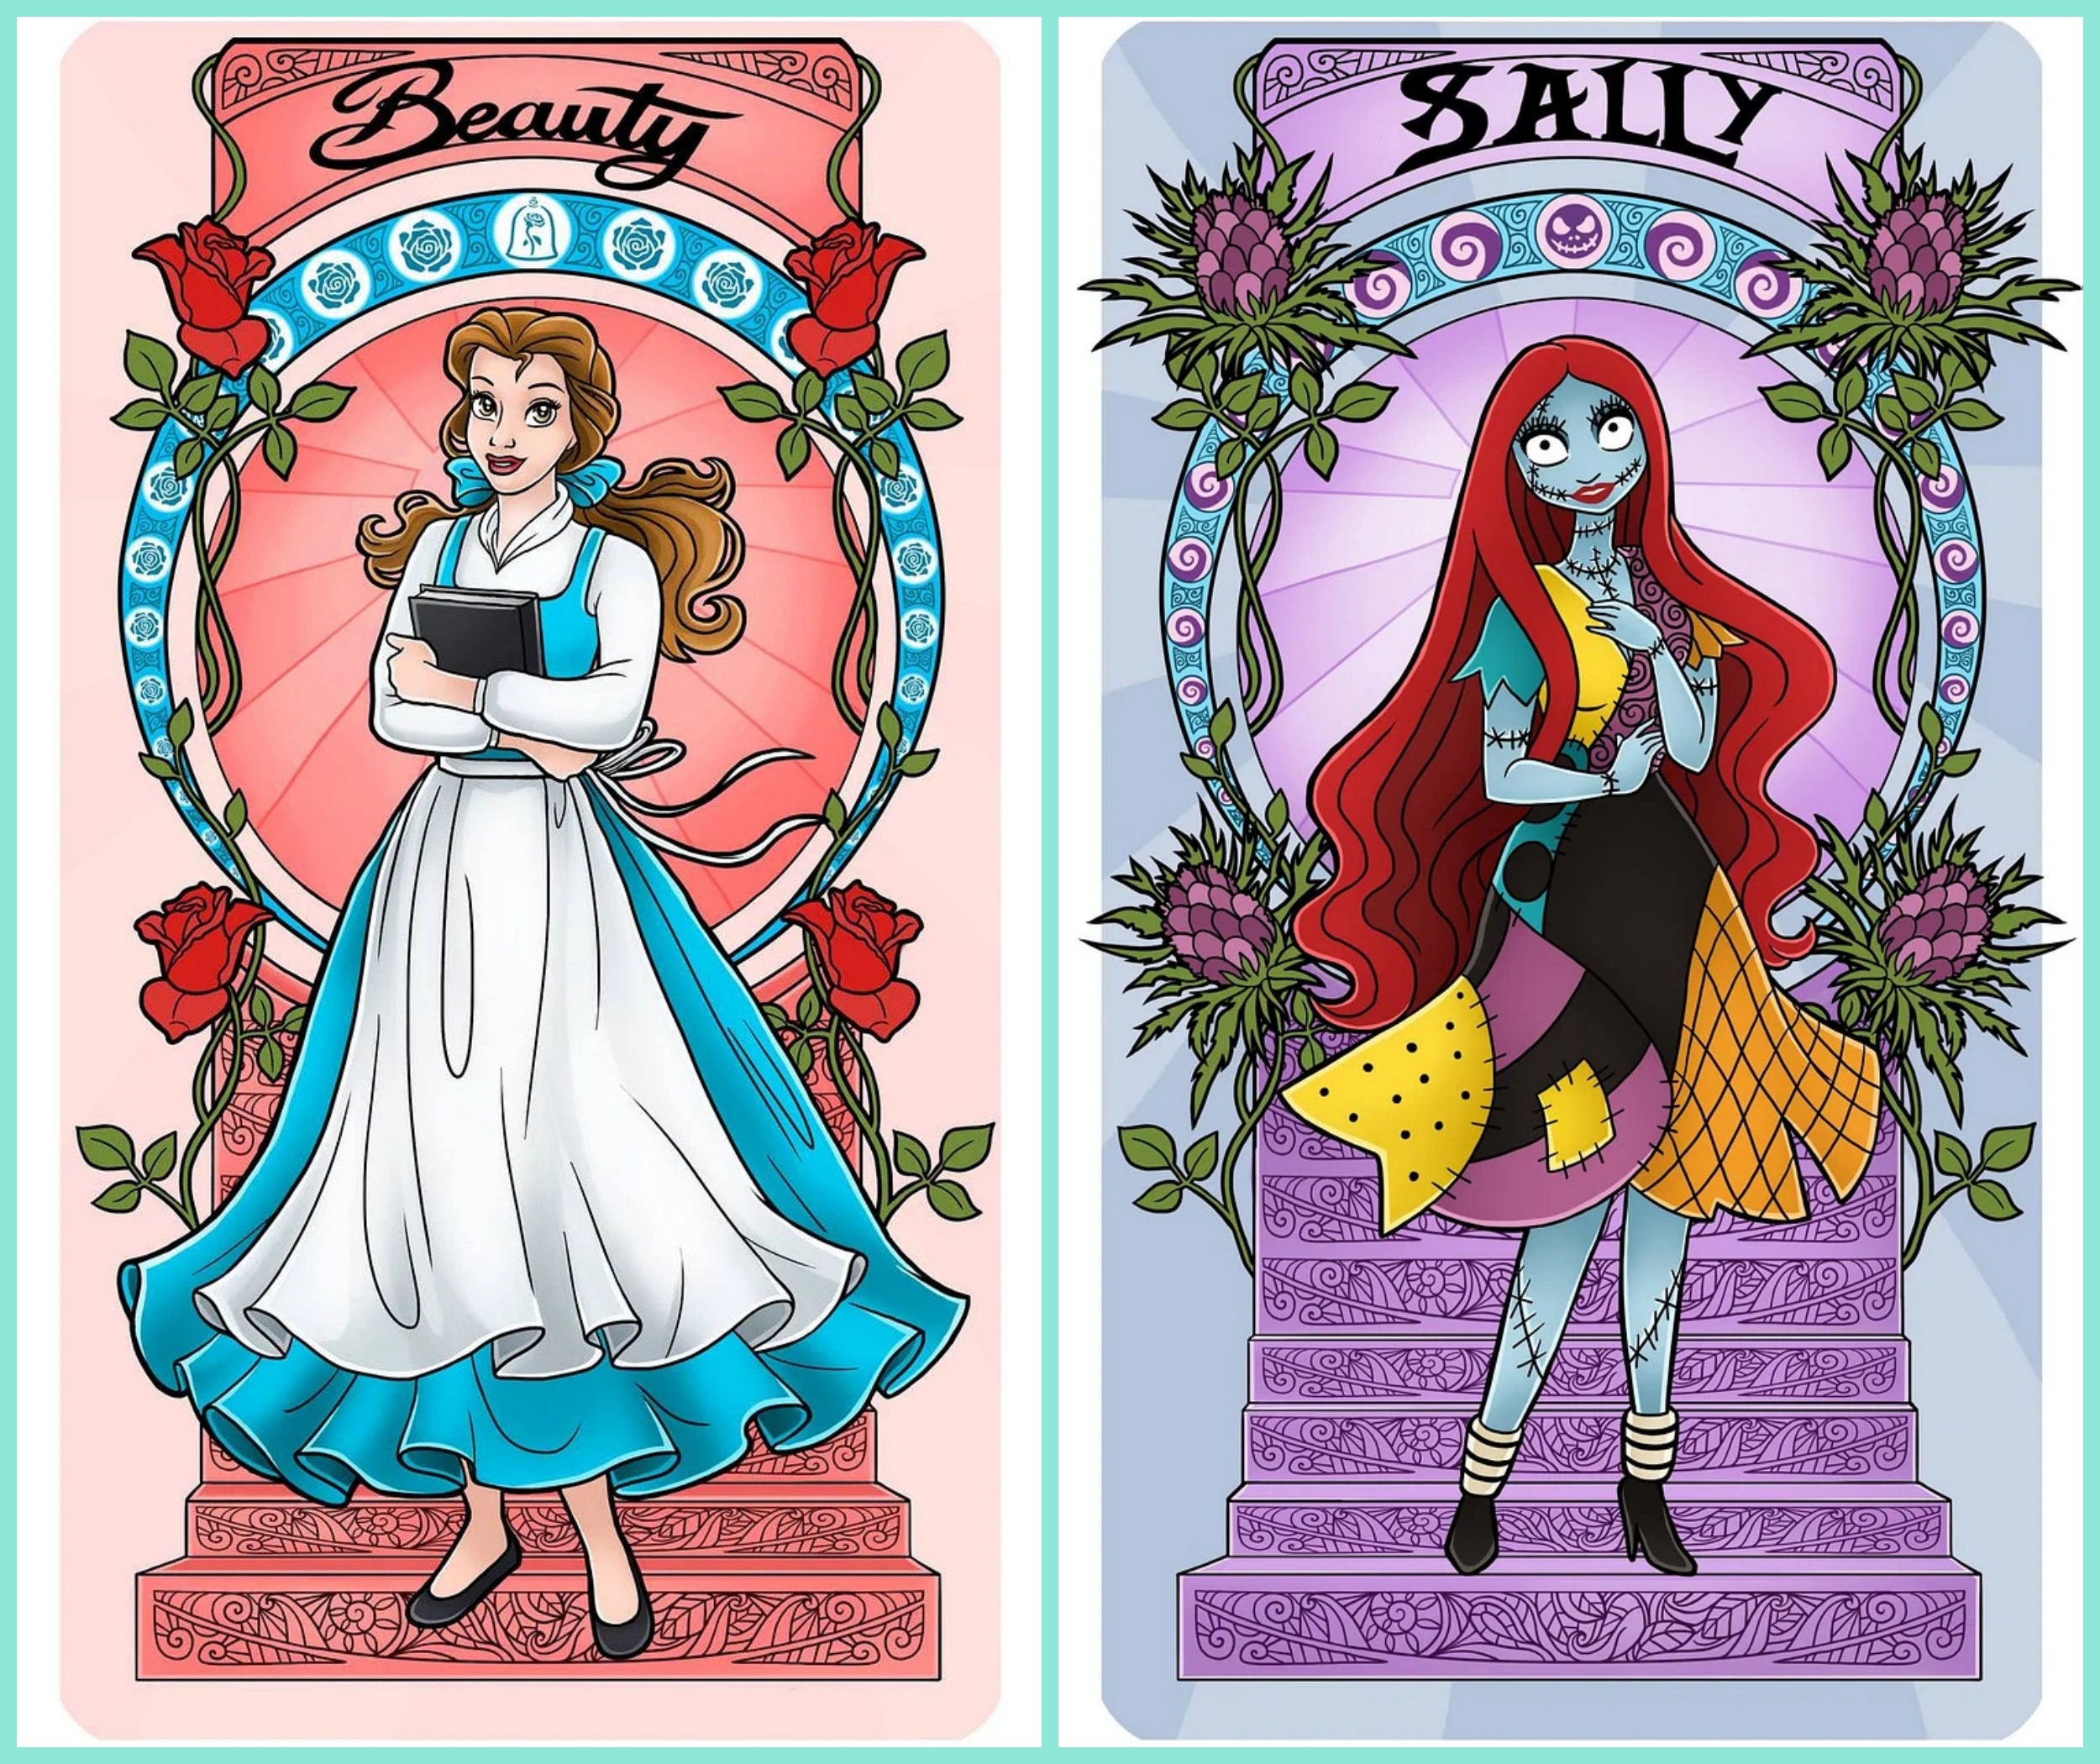 5D Diamond Painting Disney Storybook Tales Kit